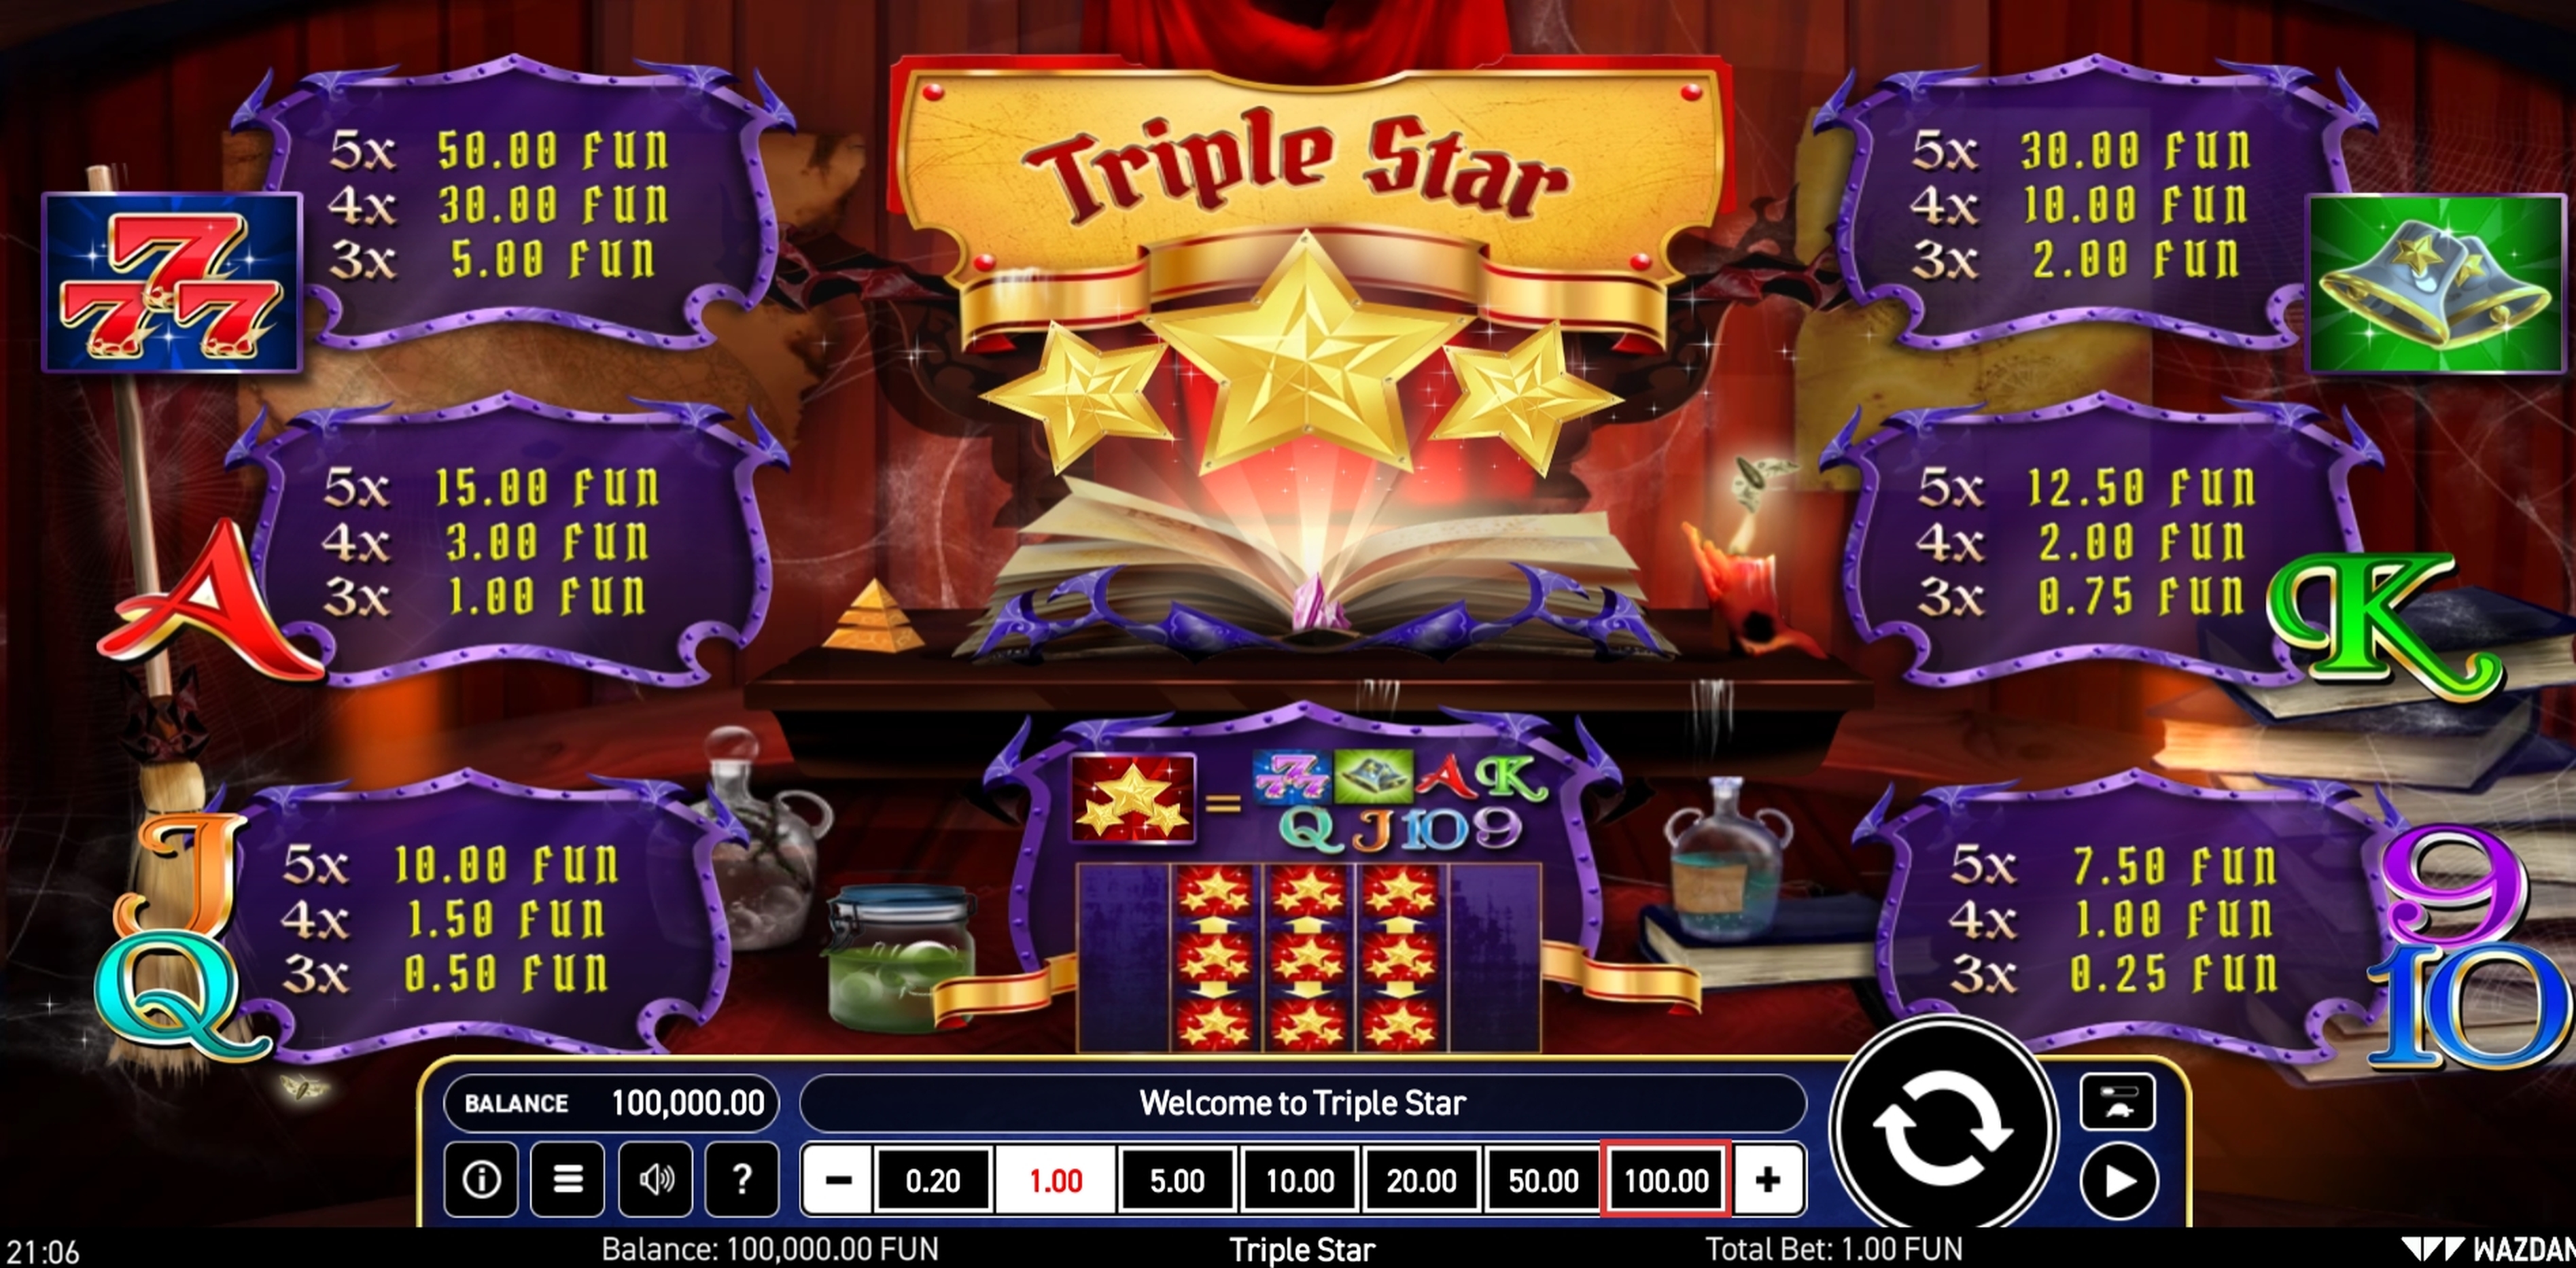 Info of Triple Star Slot Game by Wazdan